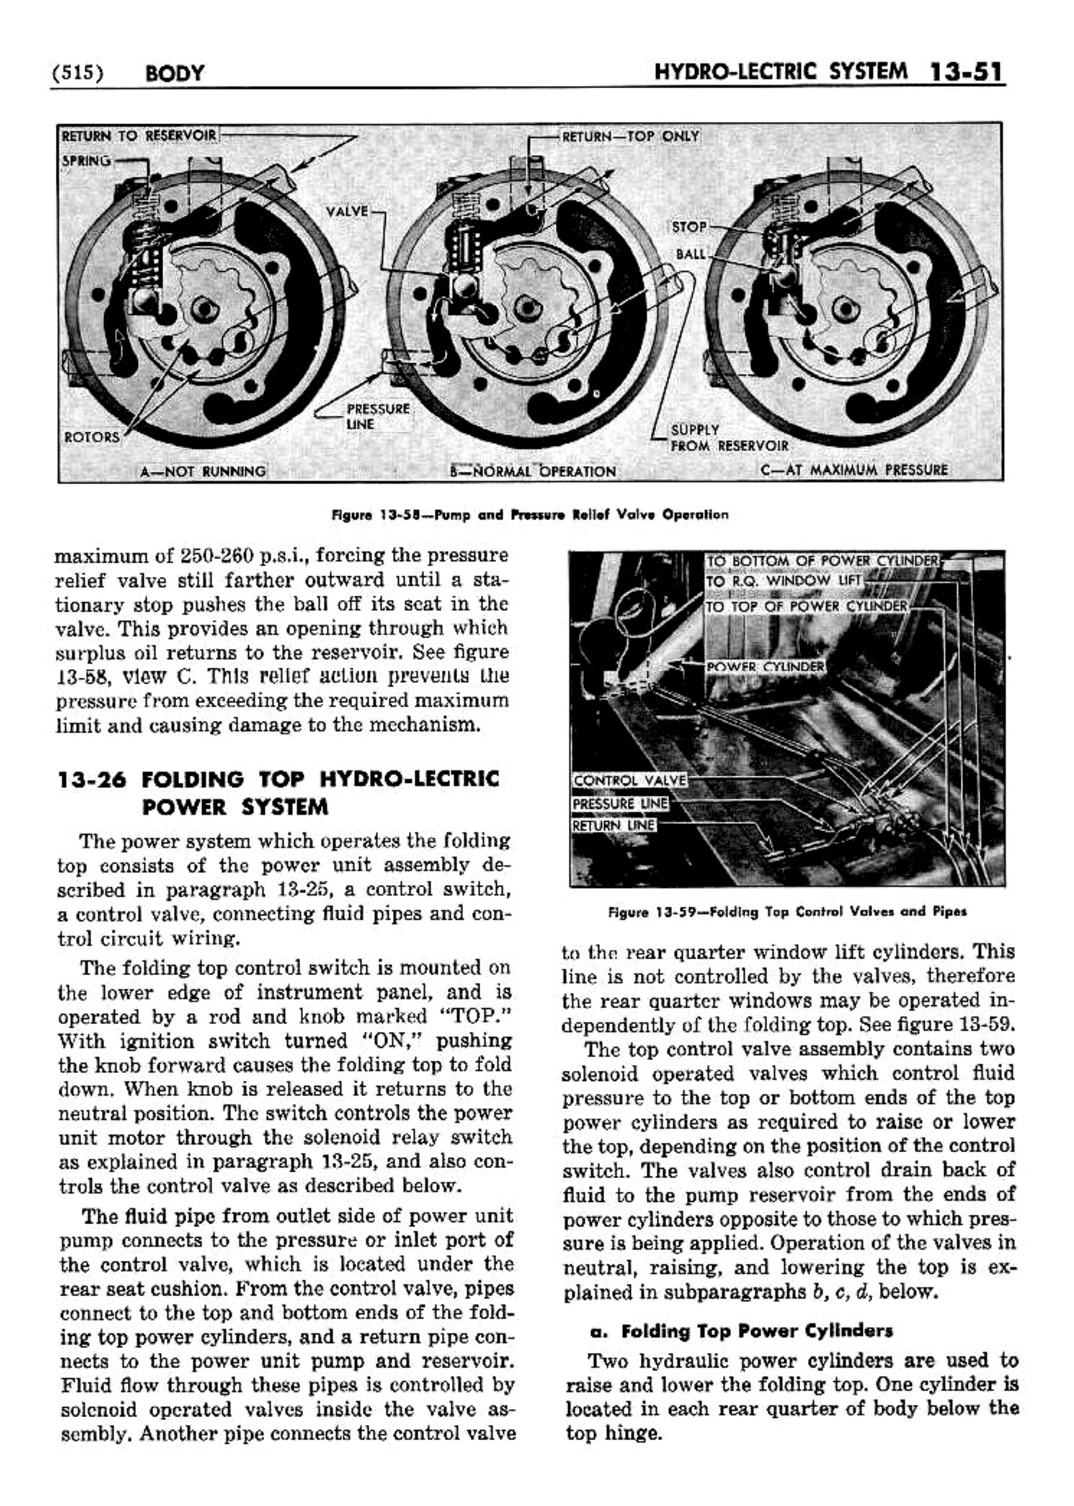 n_14 1952 Buick Shop Manual - Body-051-051.jpg